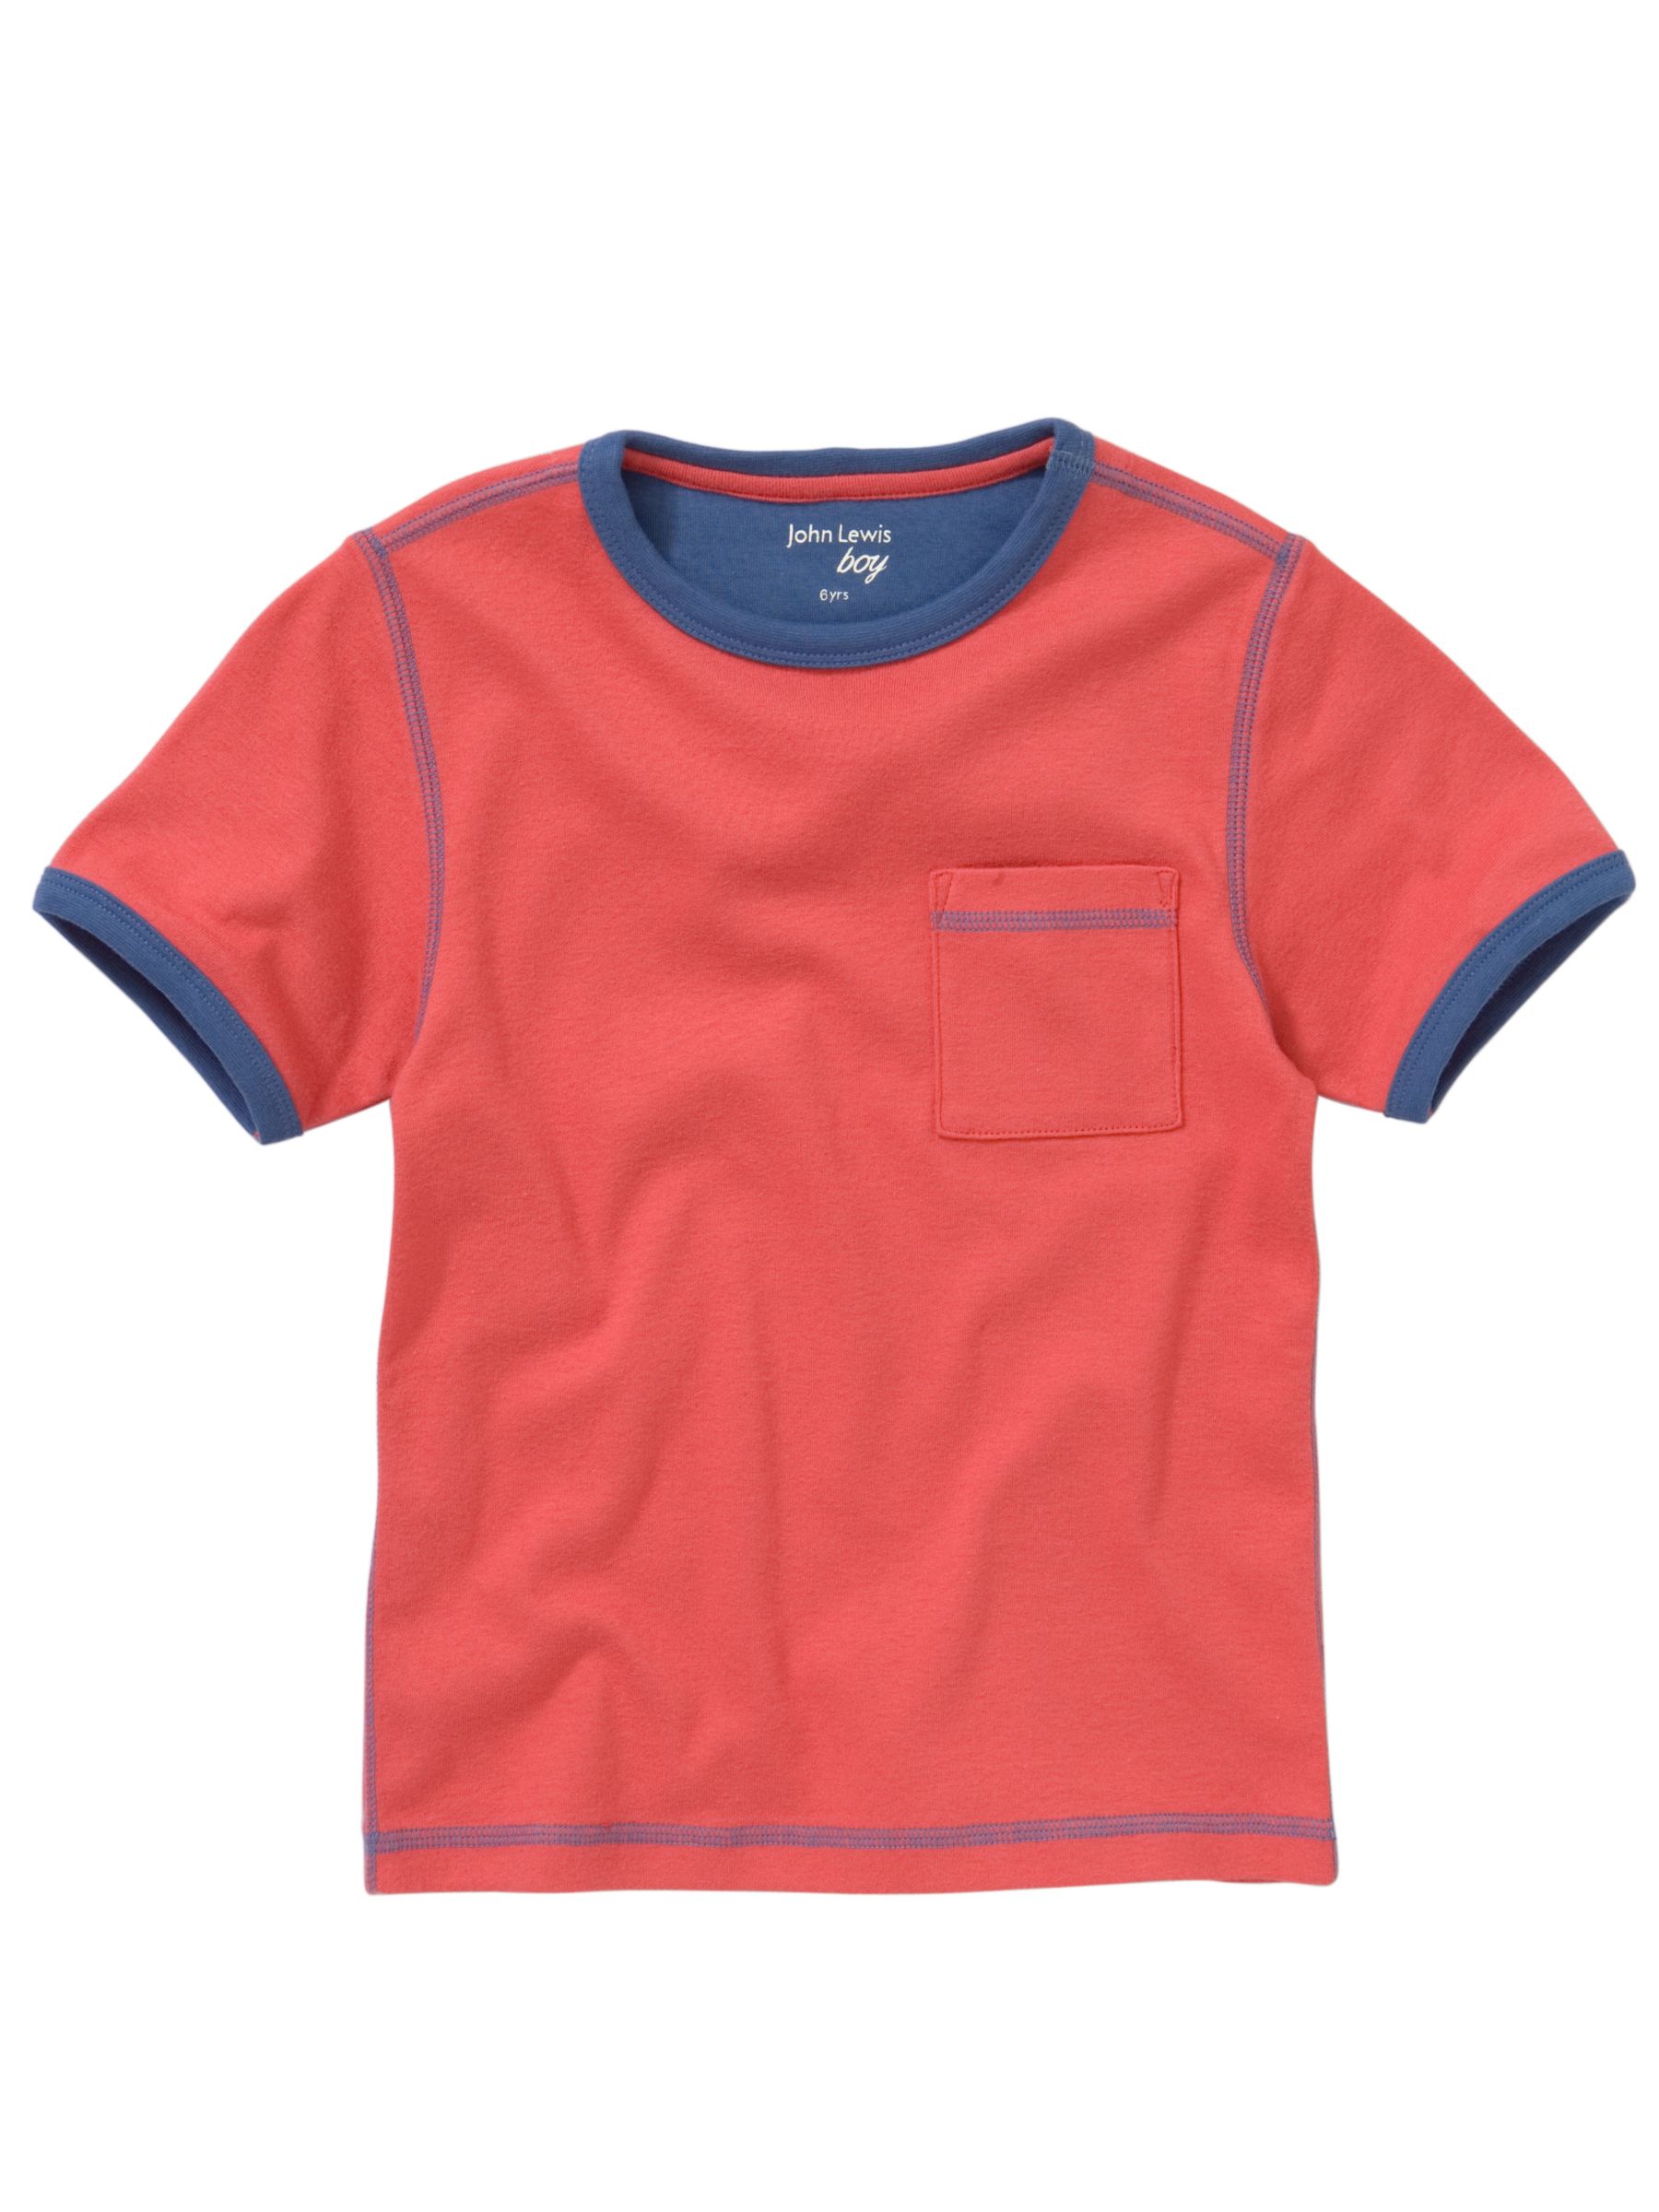 John Lewis Boy Short Sleeve T-Shirt, Red, 6 years